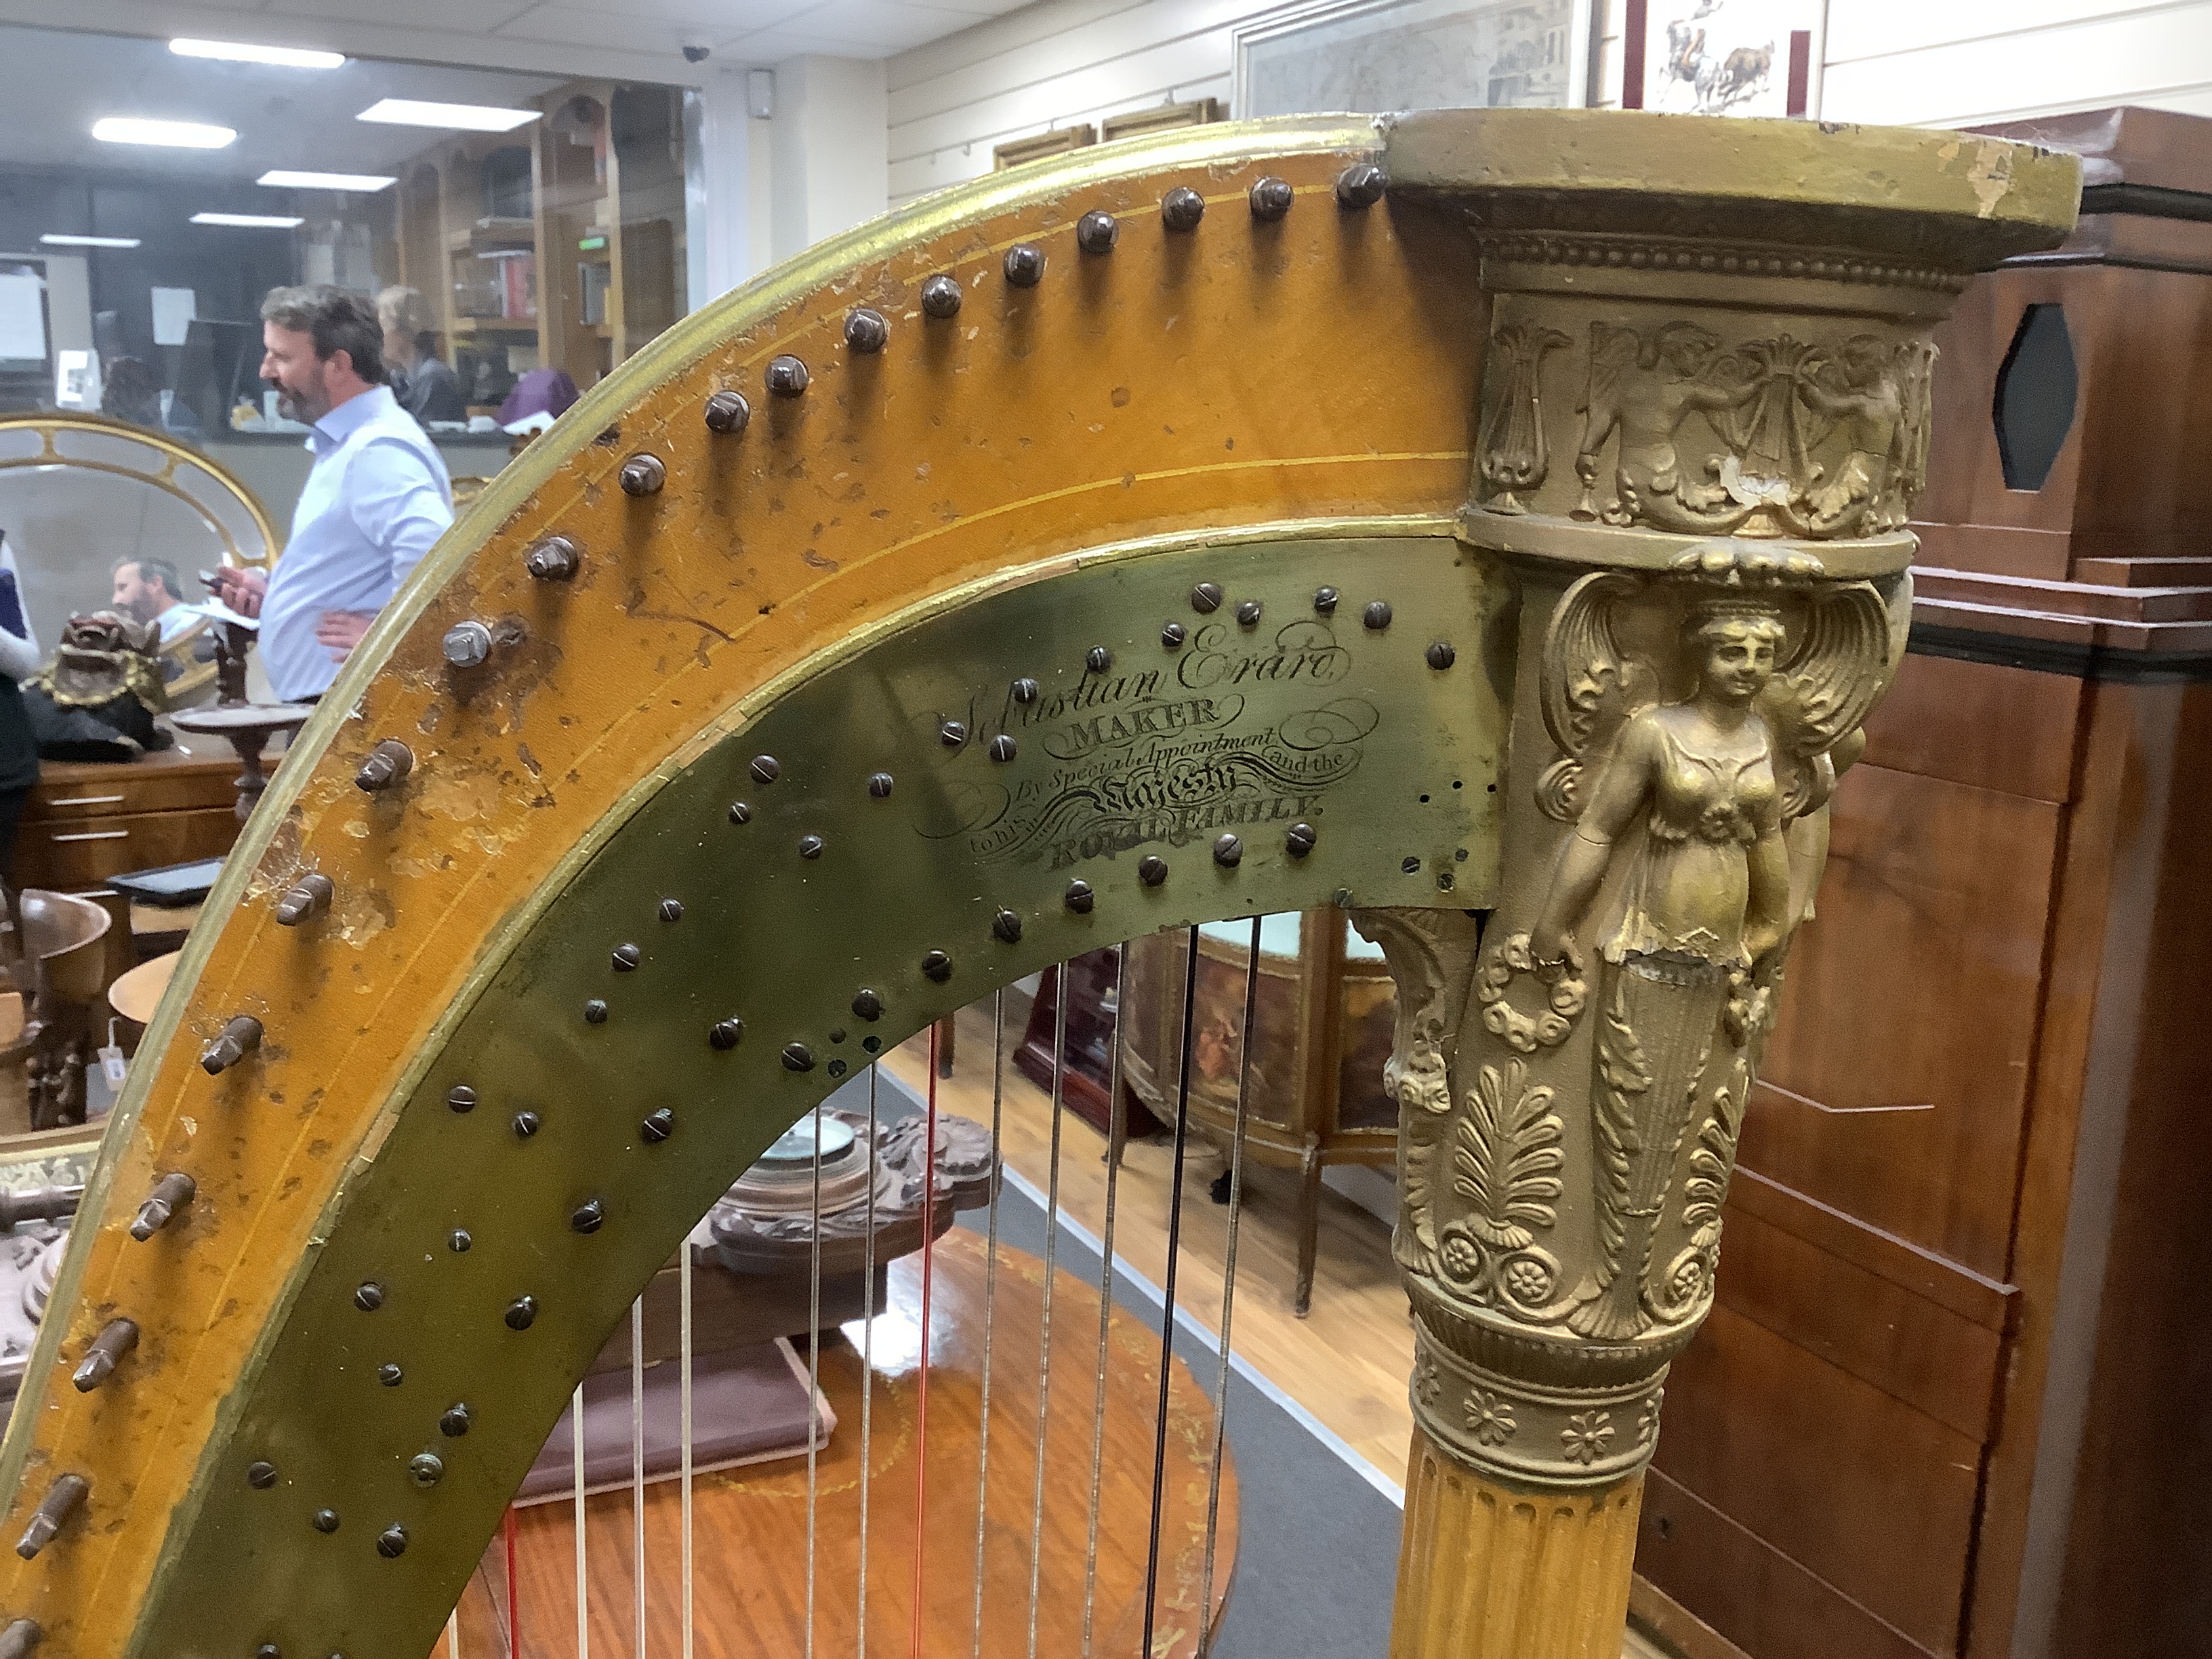 A seven pedal harp by Sebastian Erard, 18 Great Marlborough St. London, Patent N4164, cedar soundboard, fluted pillar with gilt Classical style capital, 170.5cm high